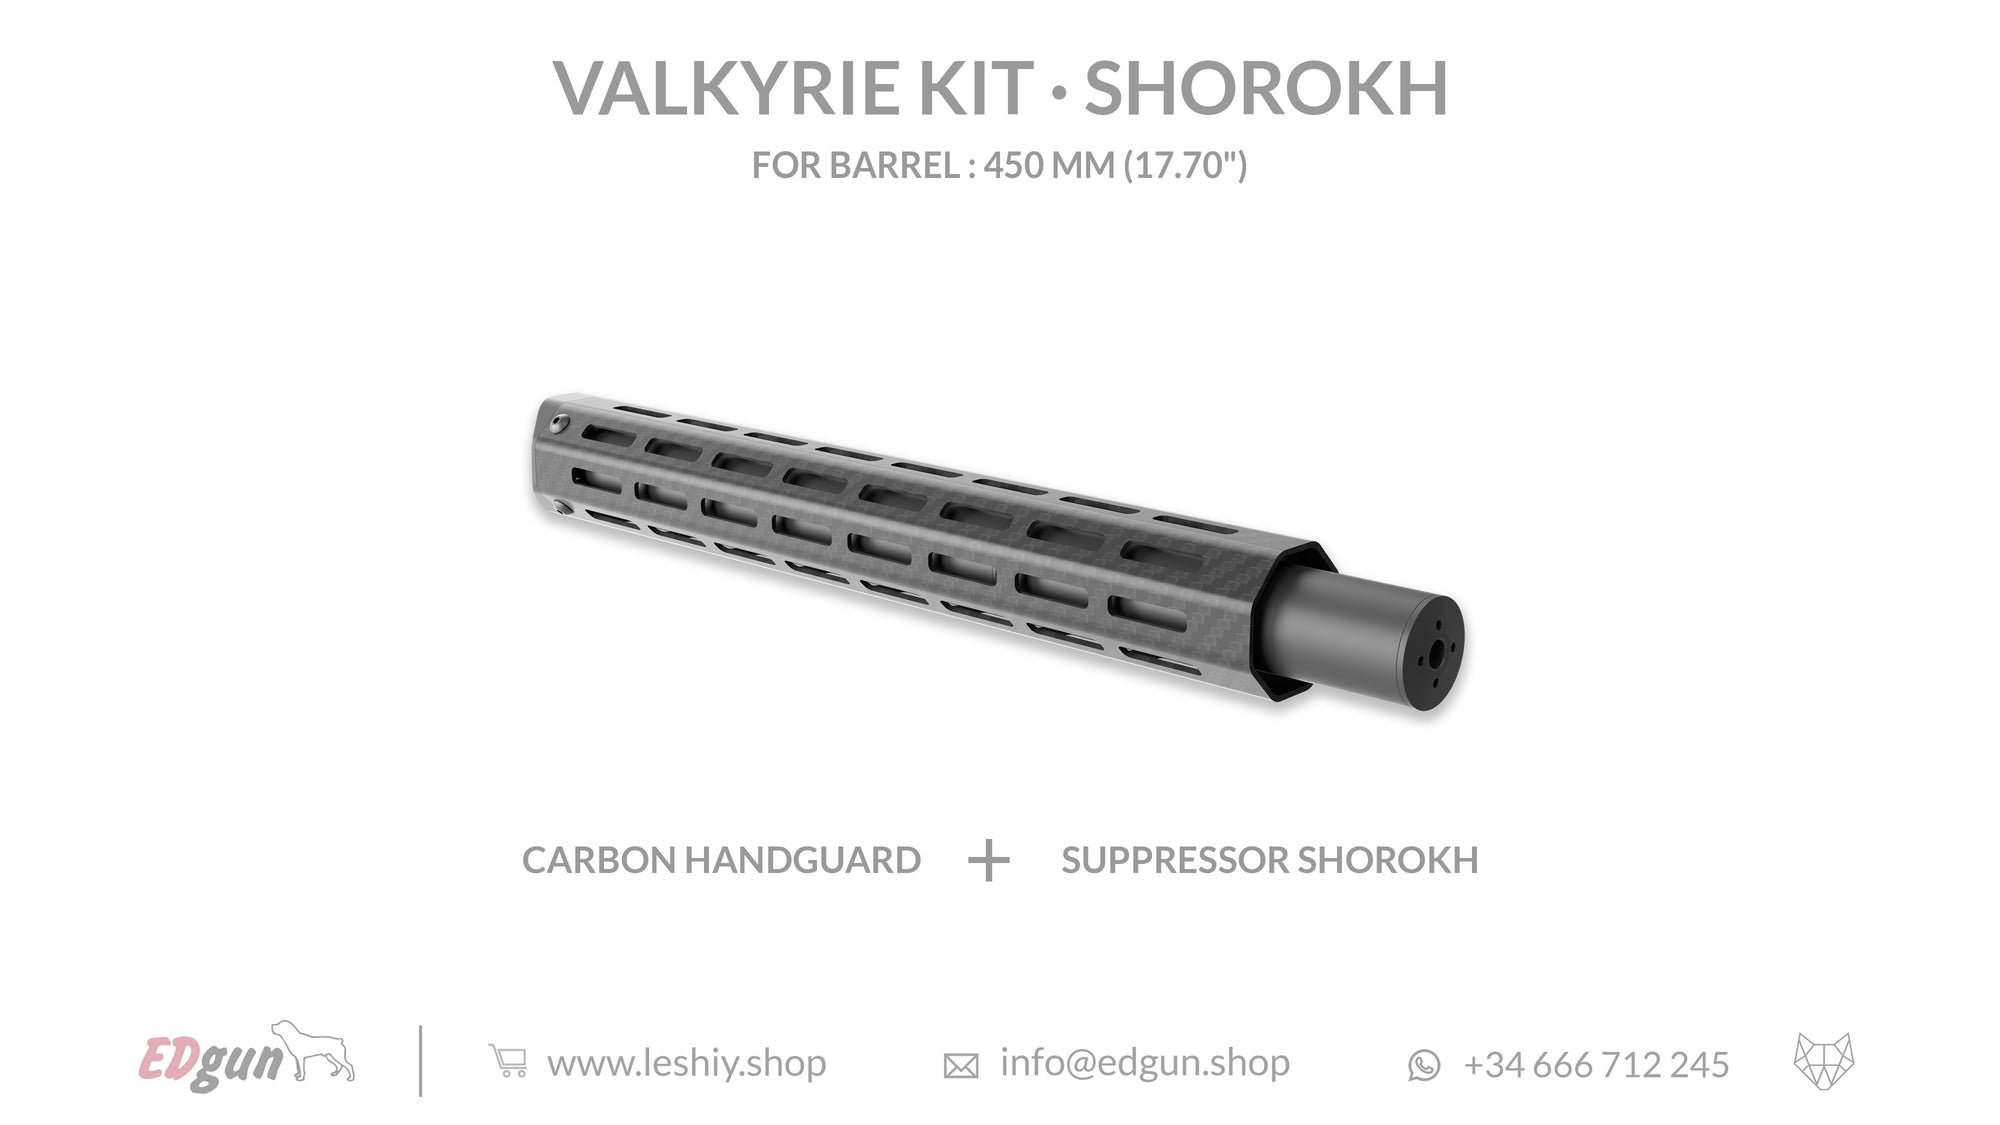 Valkyrie Kit Shorokh for barrel 450mm (17.70¨)